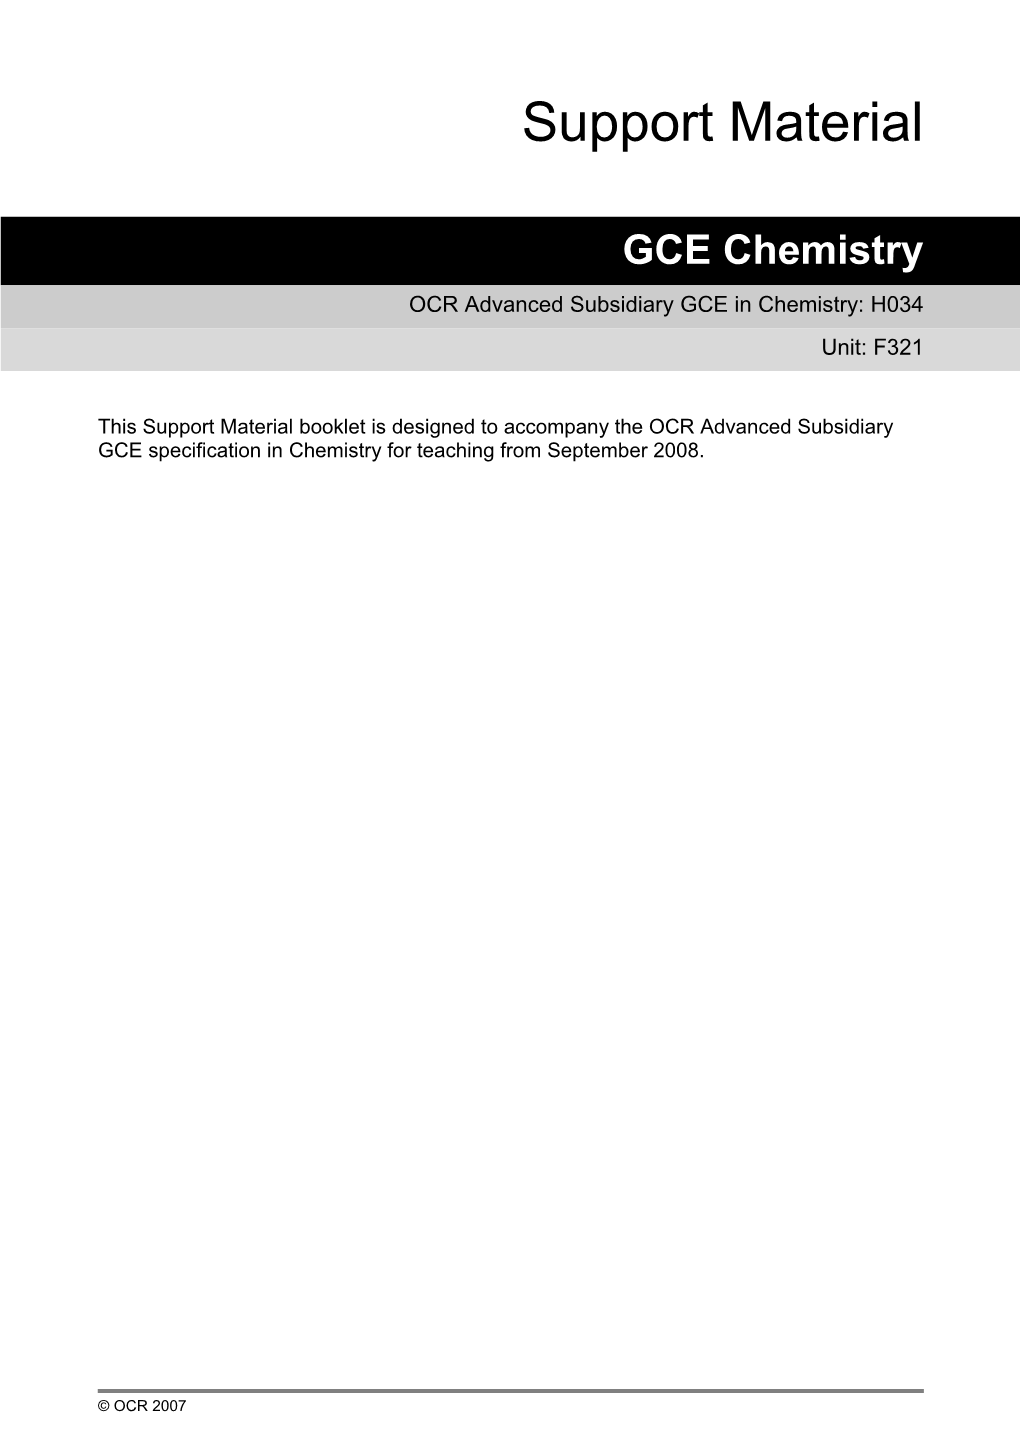 OCR Advanced Subsidiary GCE in Chemistry:H034